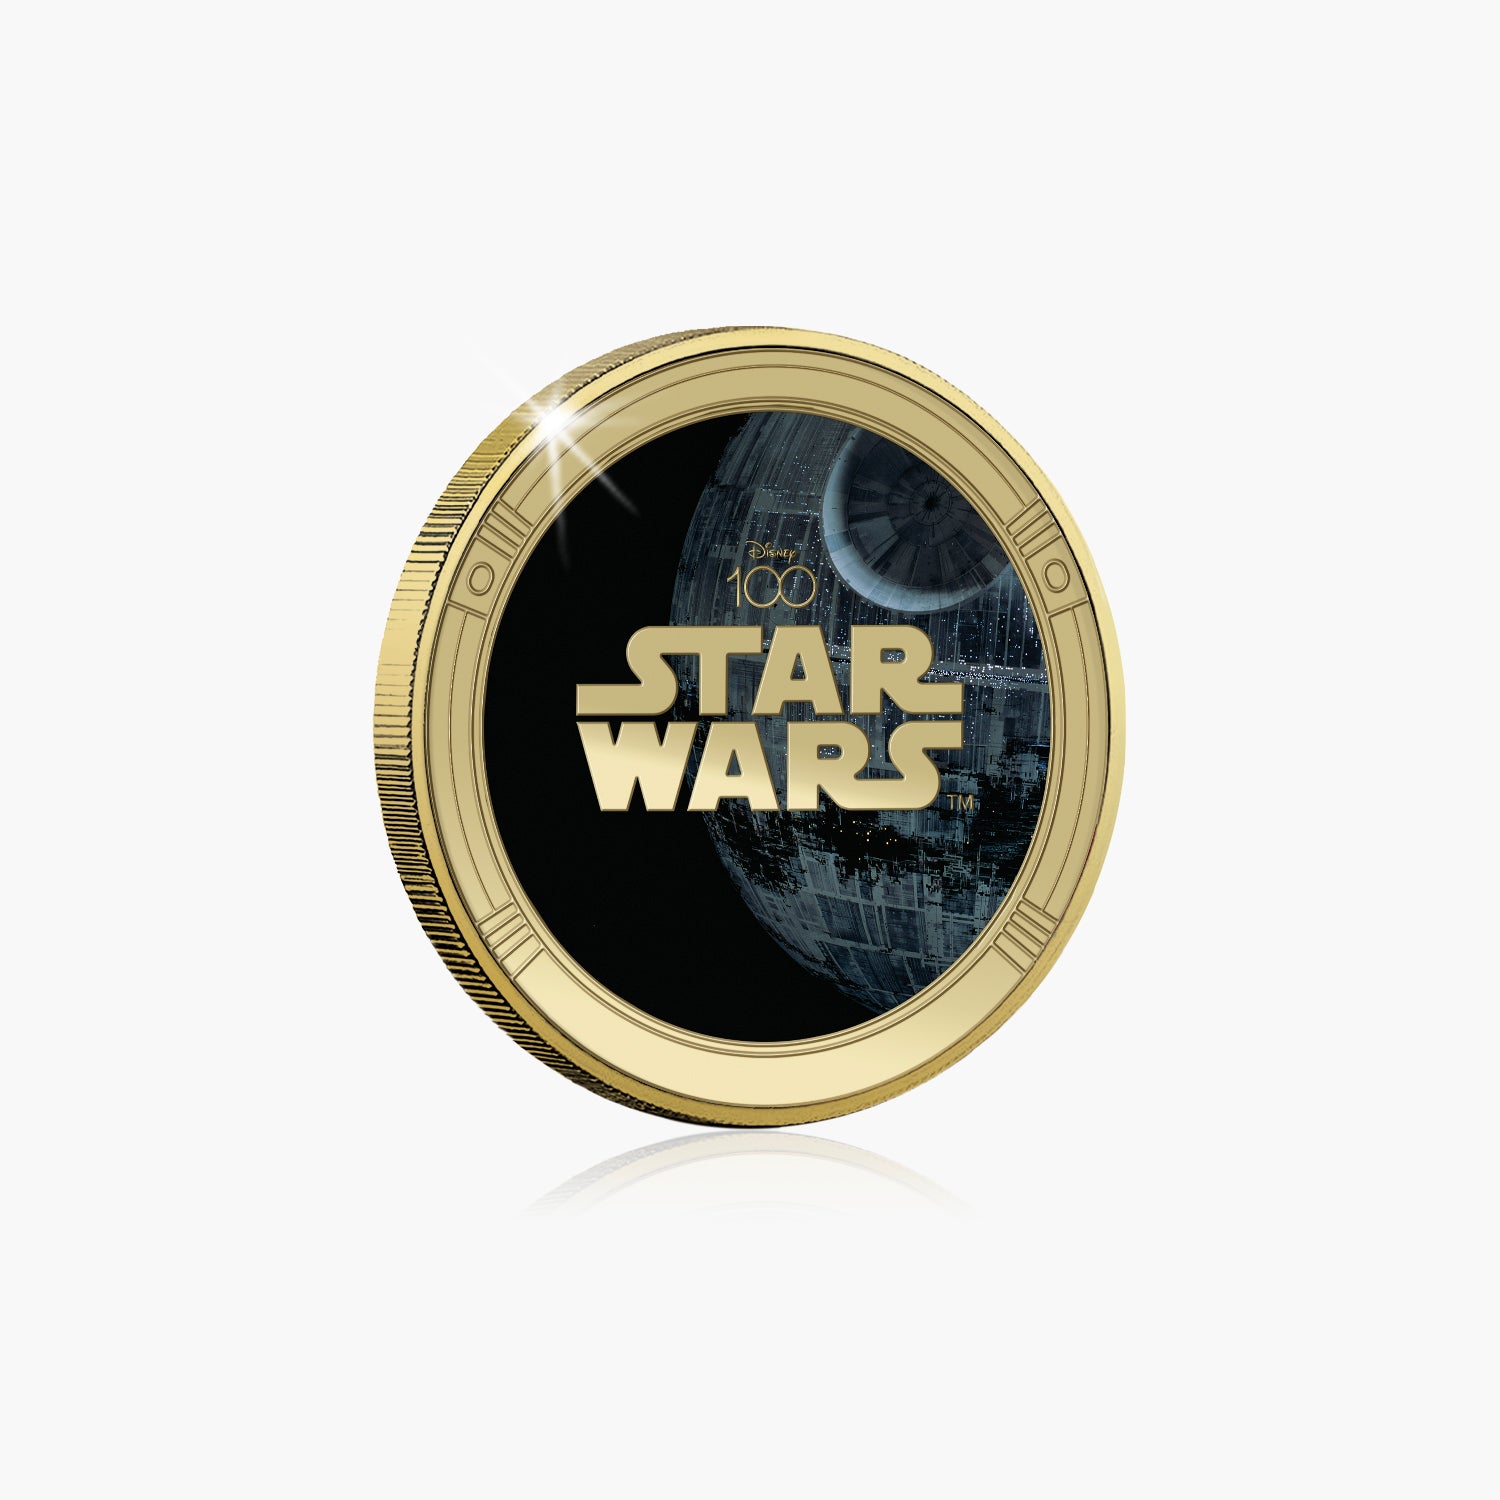 D100 Star Wars Luke VS. The Wampa Gold Plated Commemorative